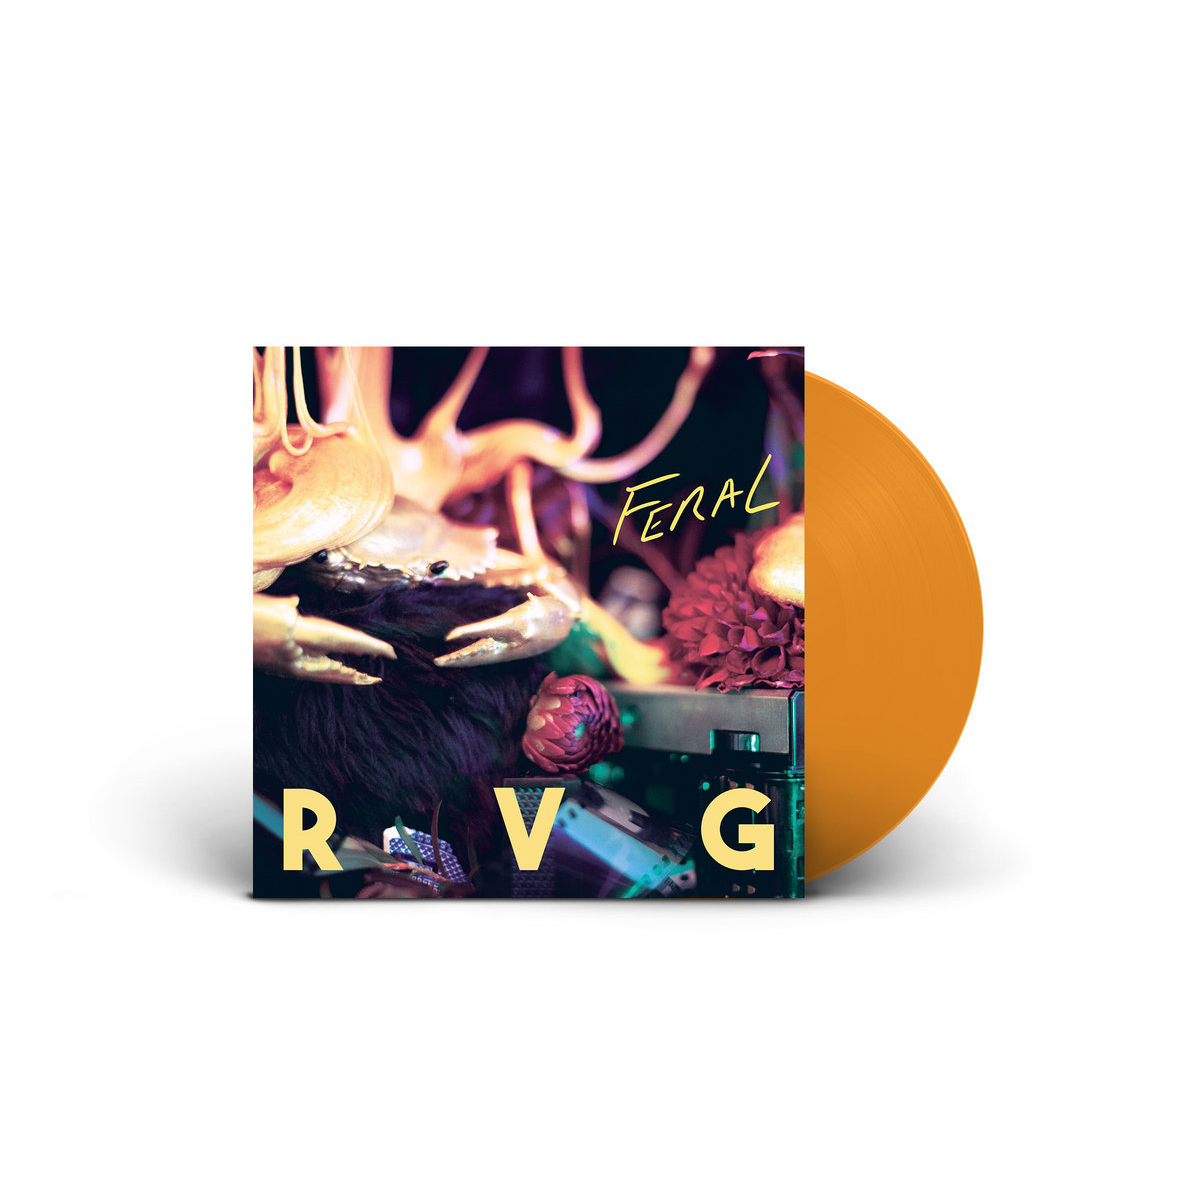 RVG - Feral: Limited Edition Orange Vinyl LP. 